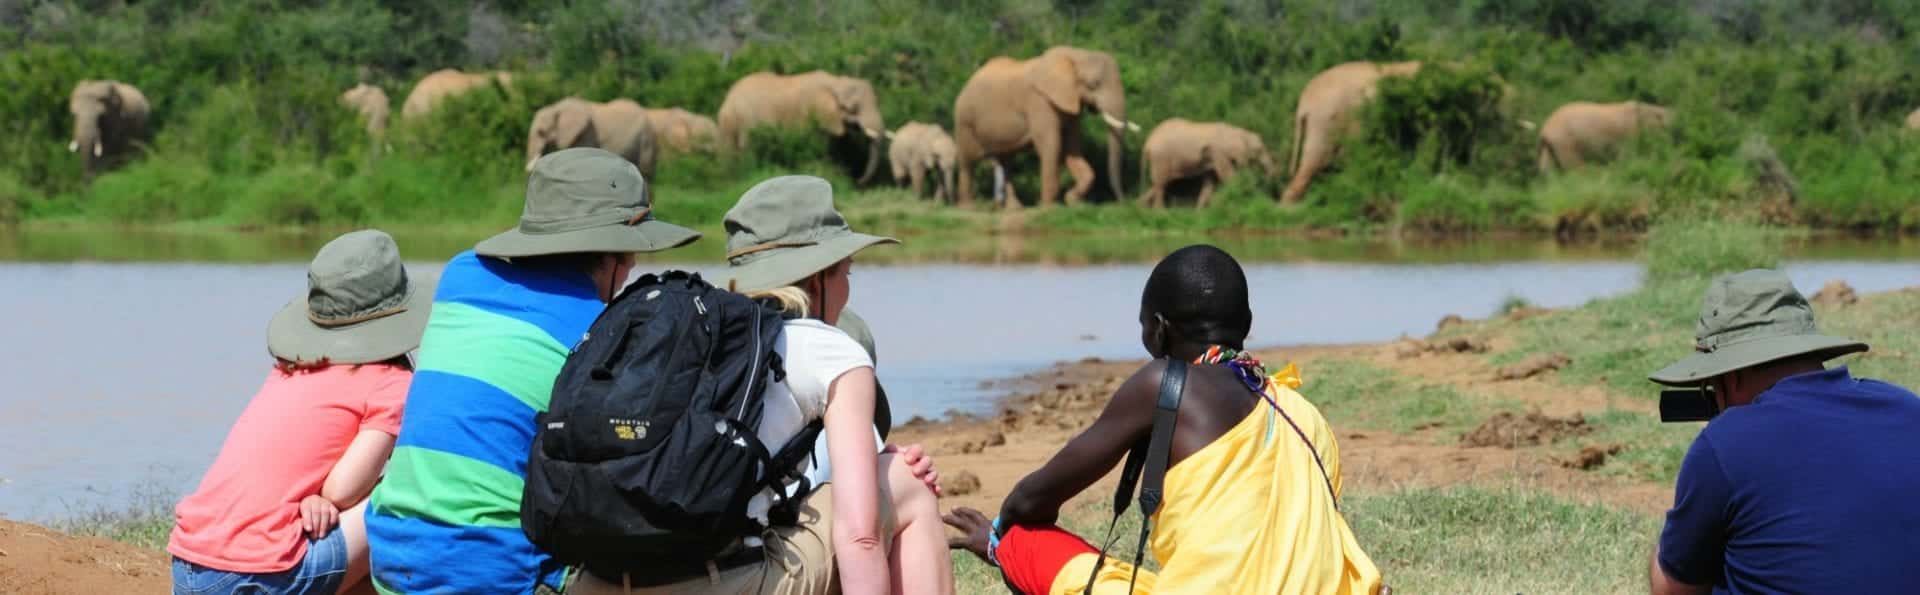 Karisia elephants on walking safari